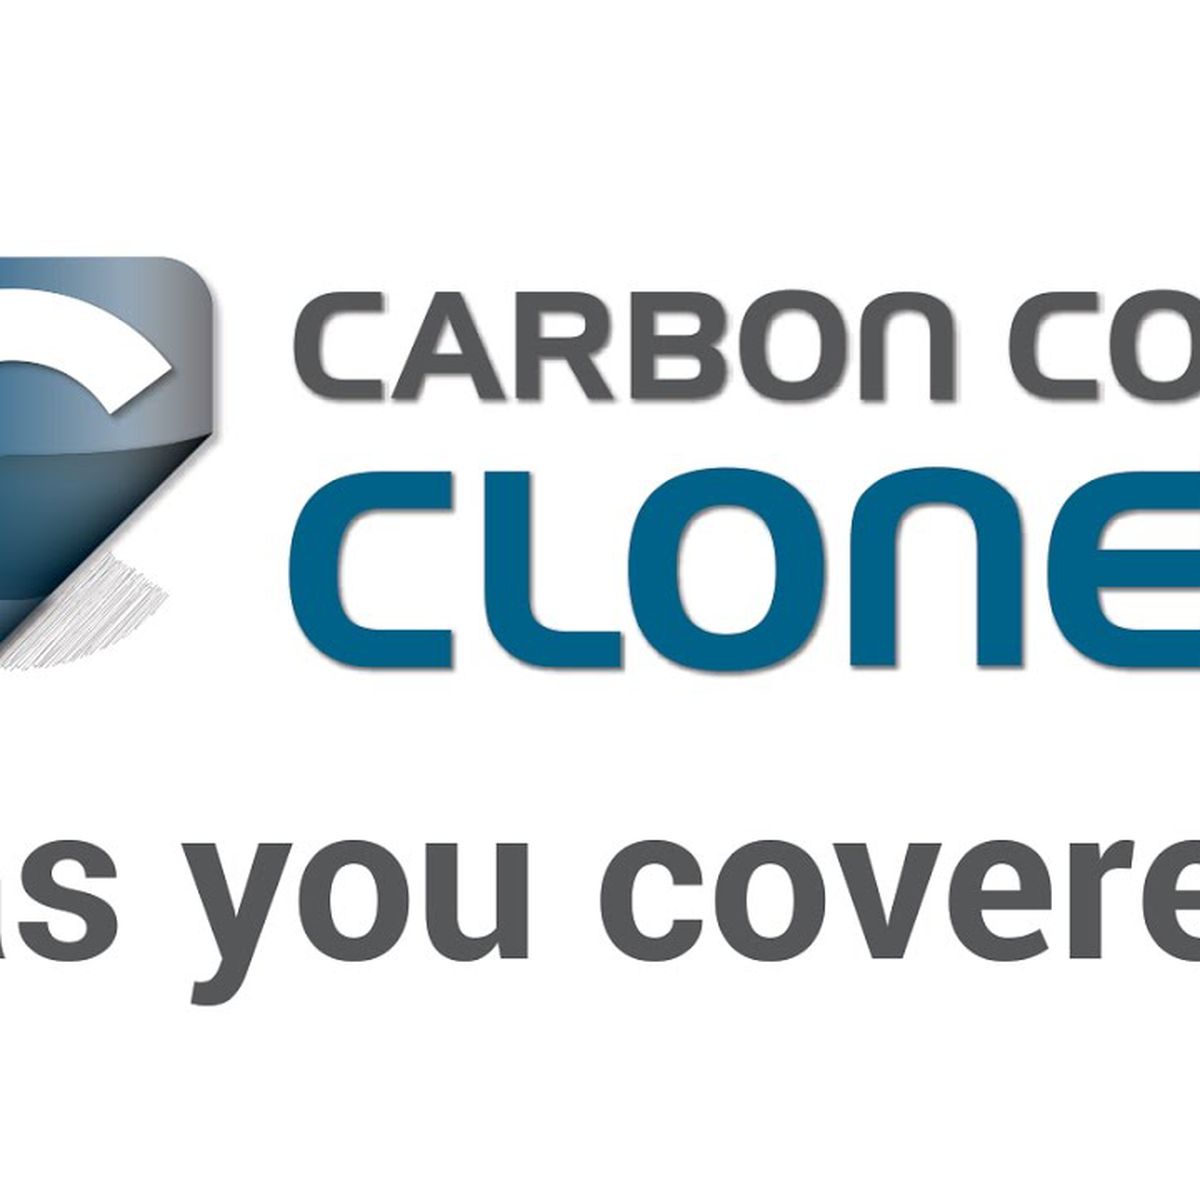 carbon copy cloner guide